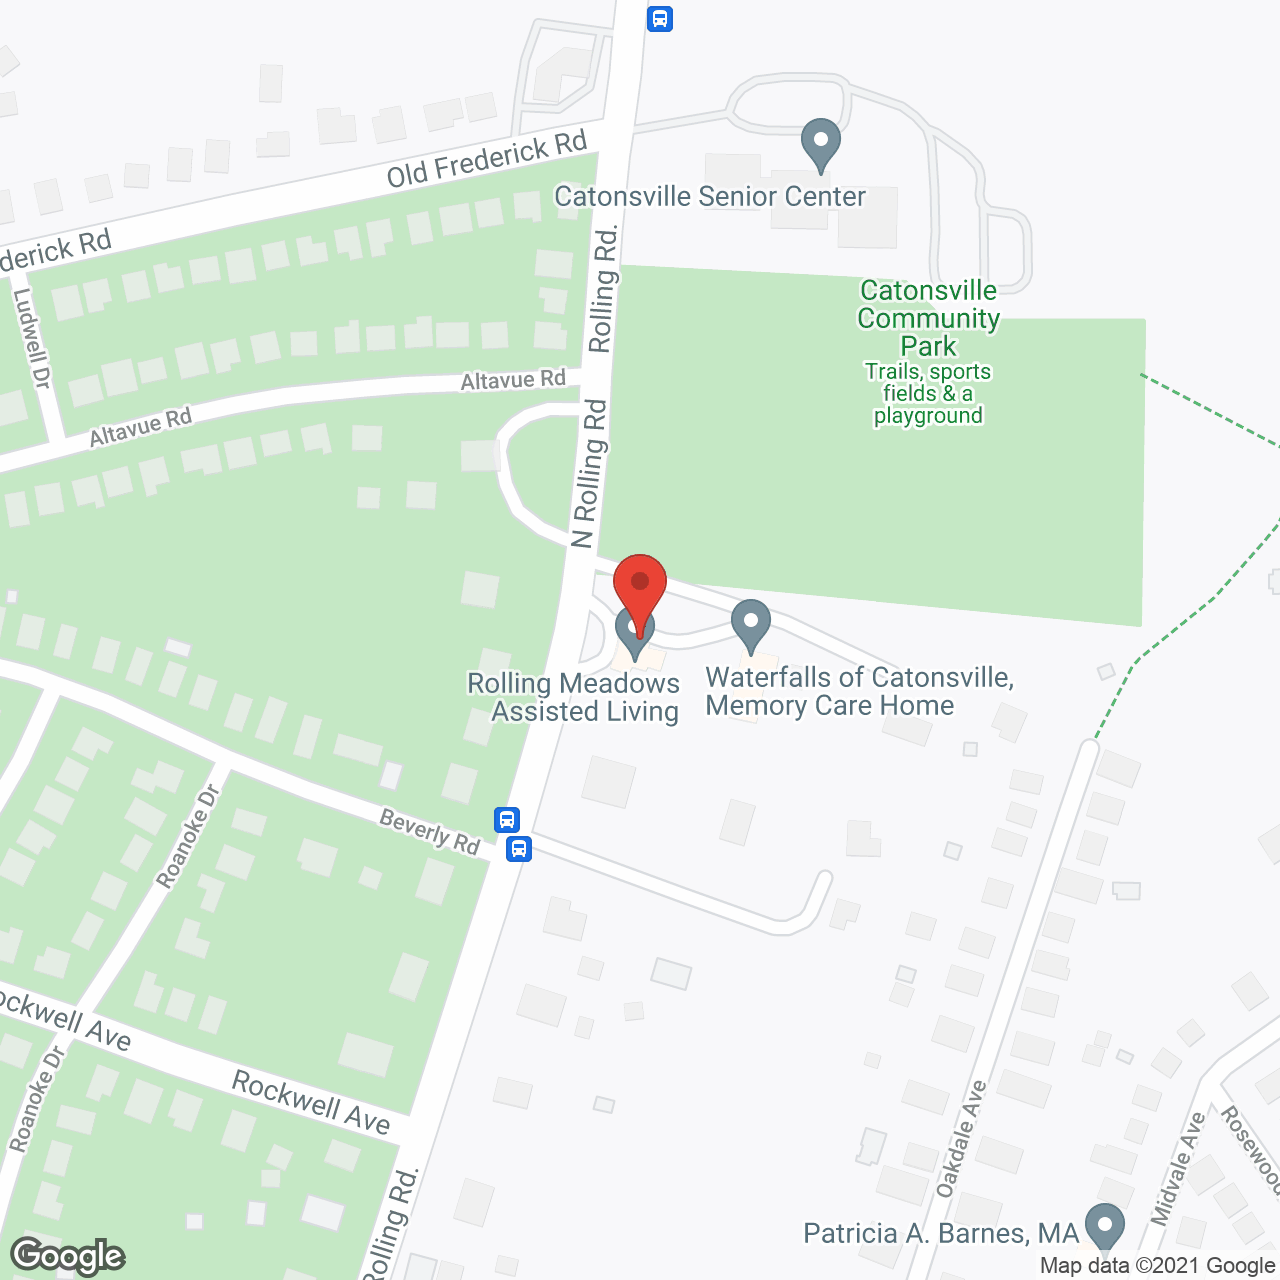 Rolling Meadows in google map